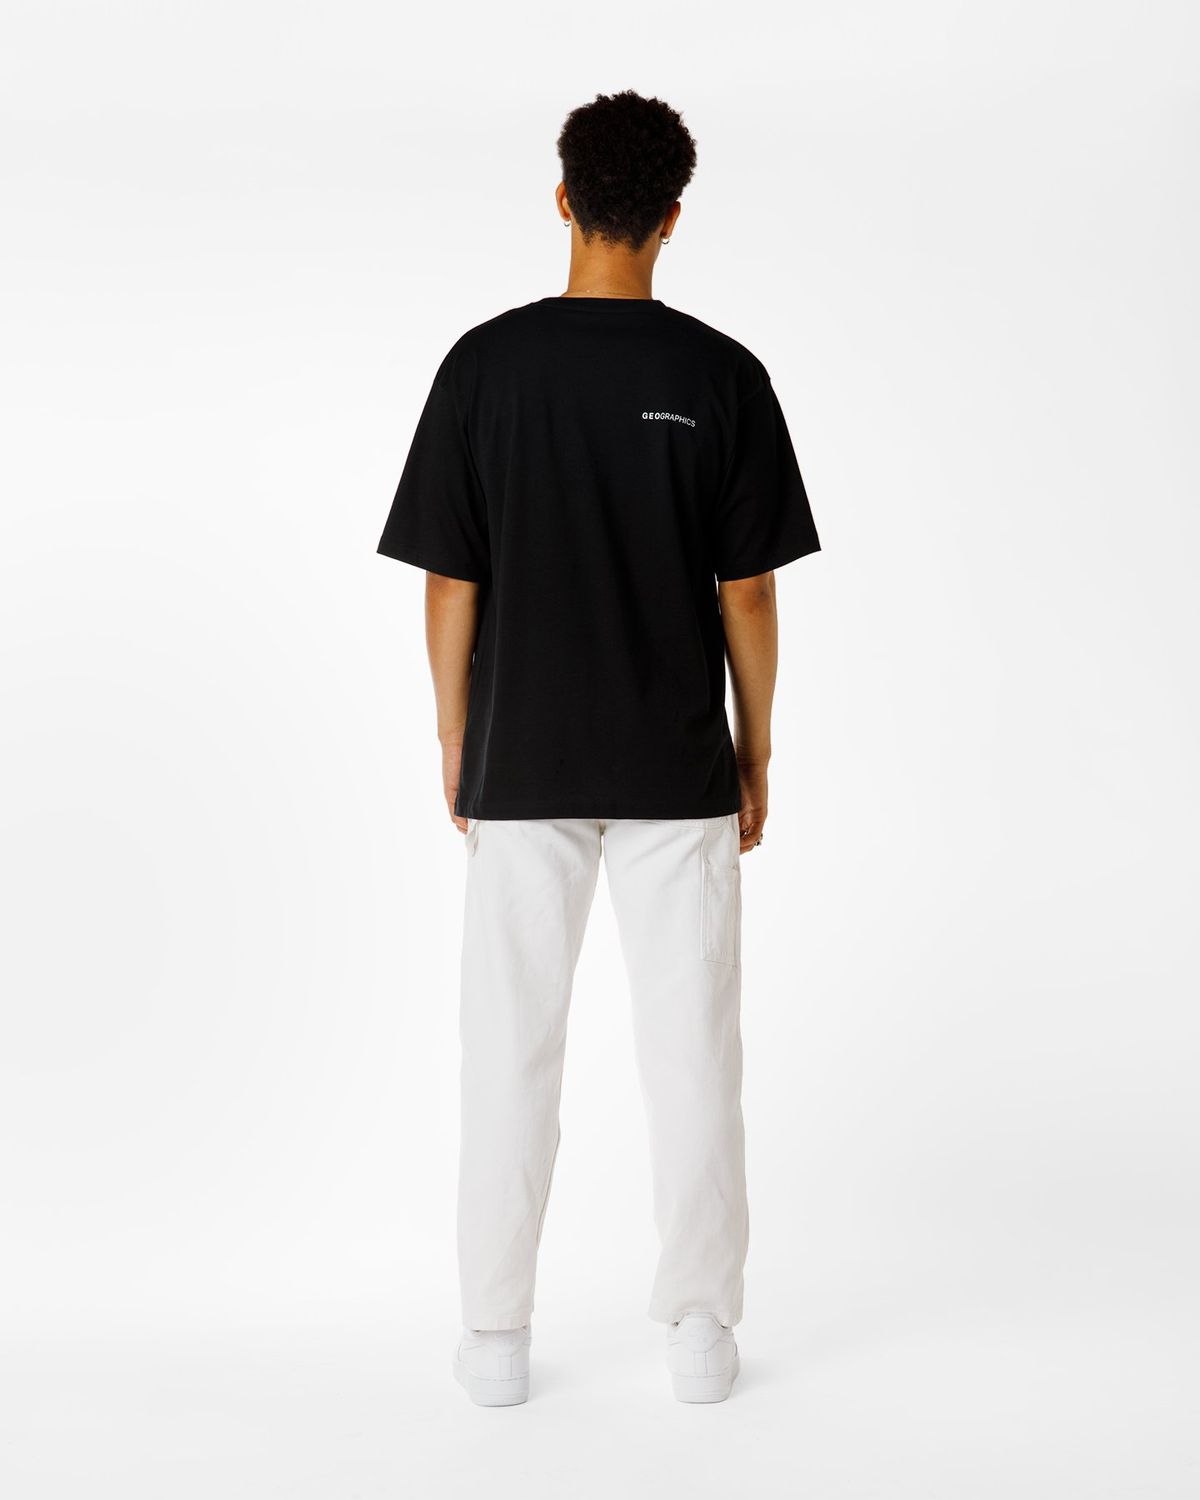 GEO – European Dream T-Shirt - T-shirts - Black - Image 6